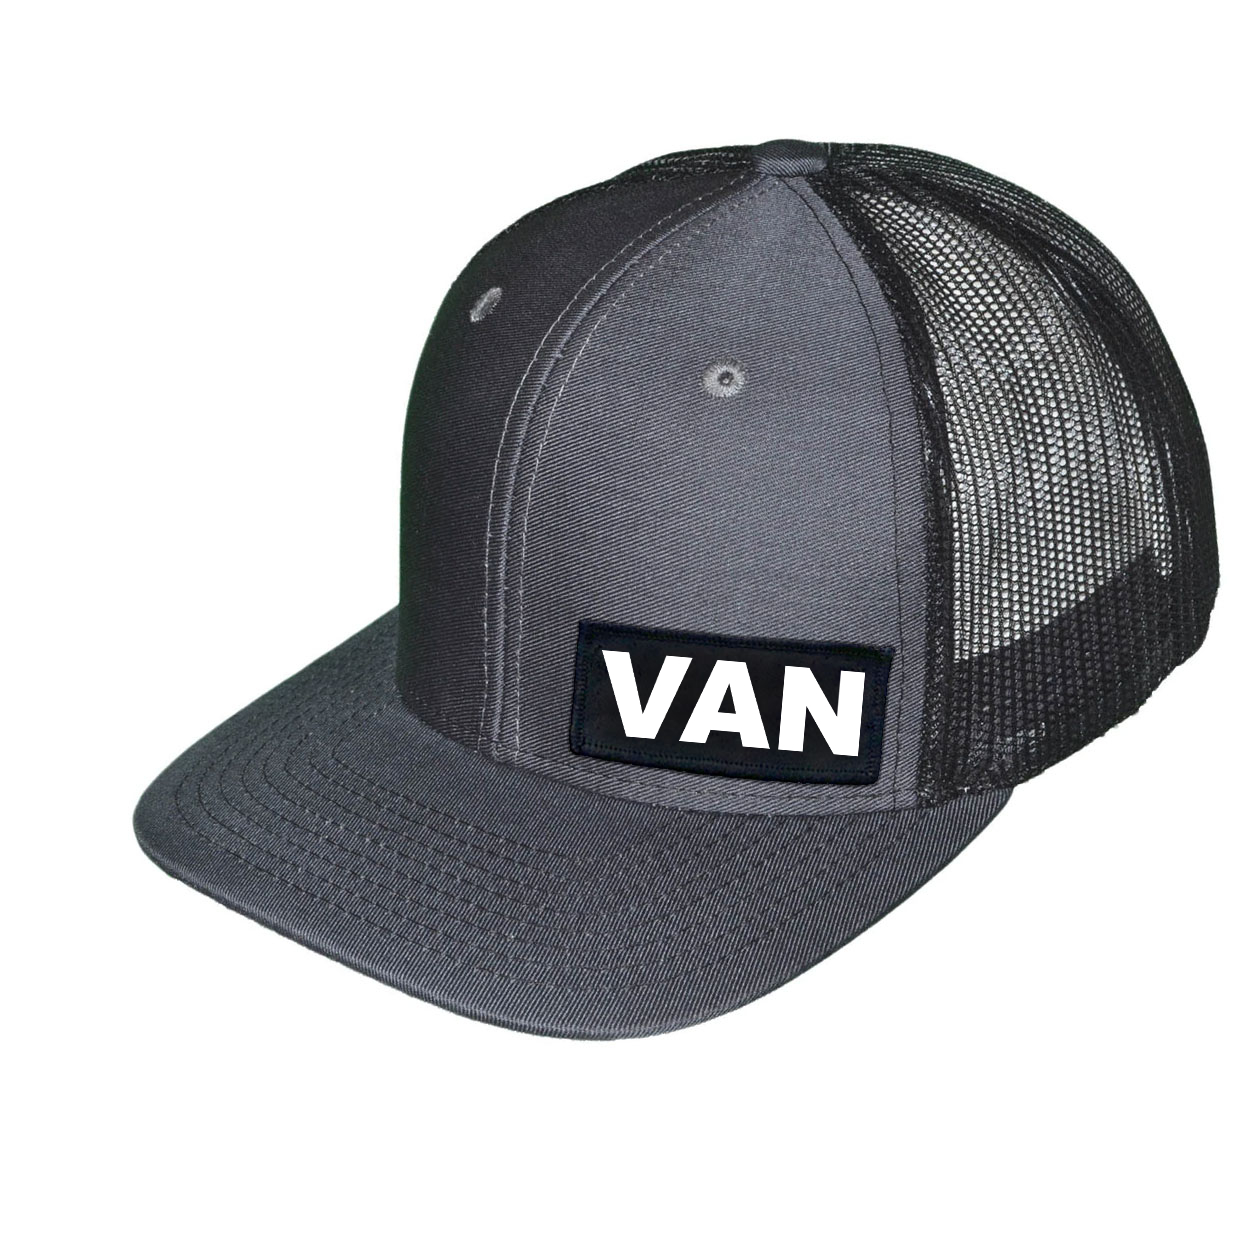 Van Brand Logo Night Out Woven Patch Snapback Trucker Hat Dark Gray/Black